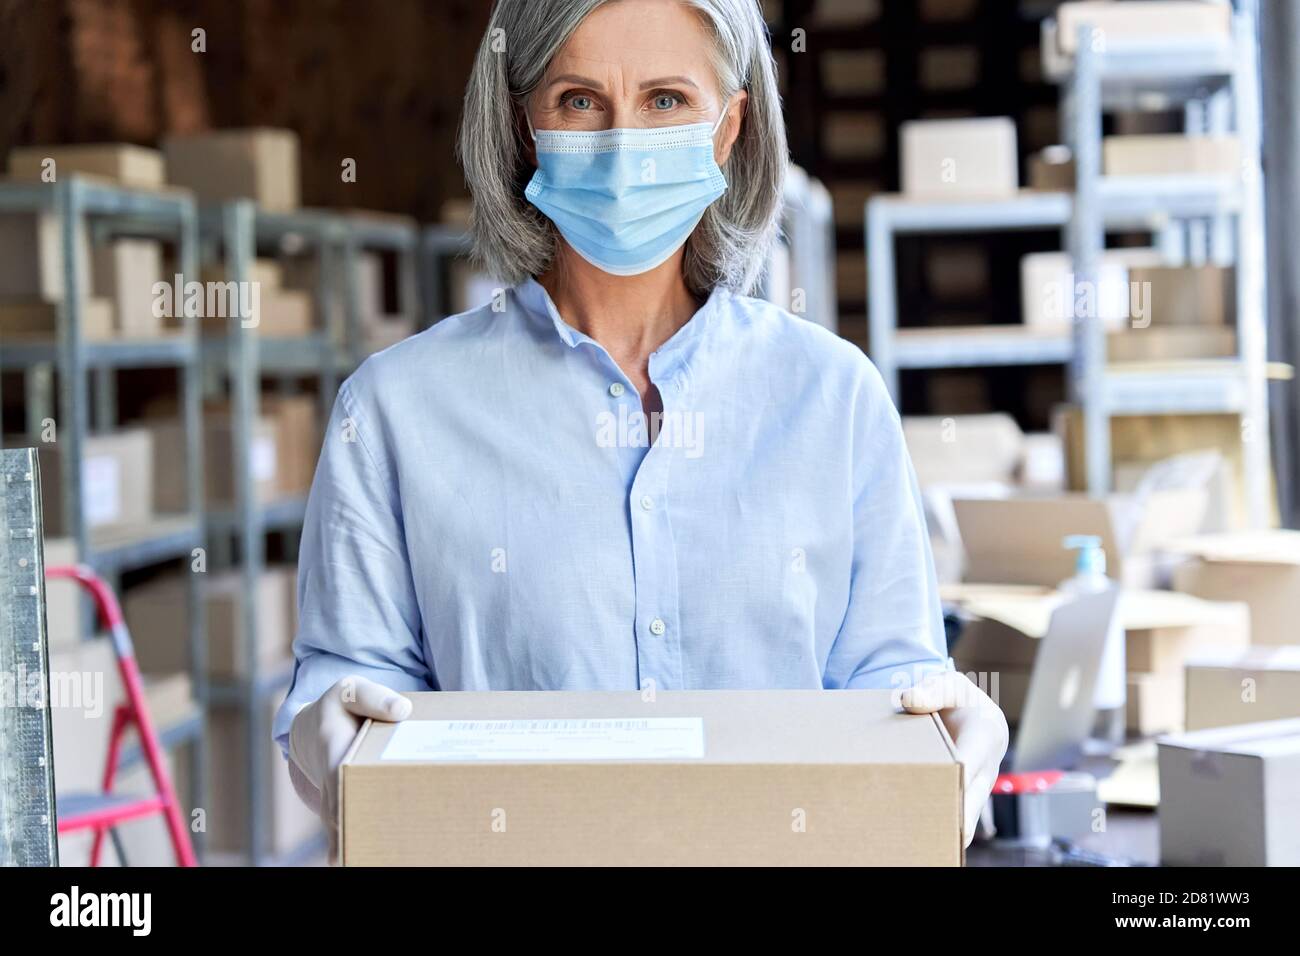 Older woman entrepreneur wearing face mask holding parcel box, portrait. Stock Photo